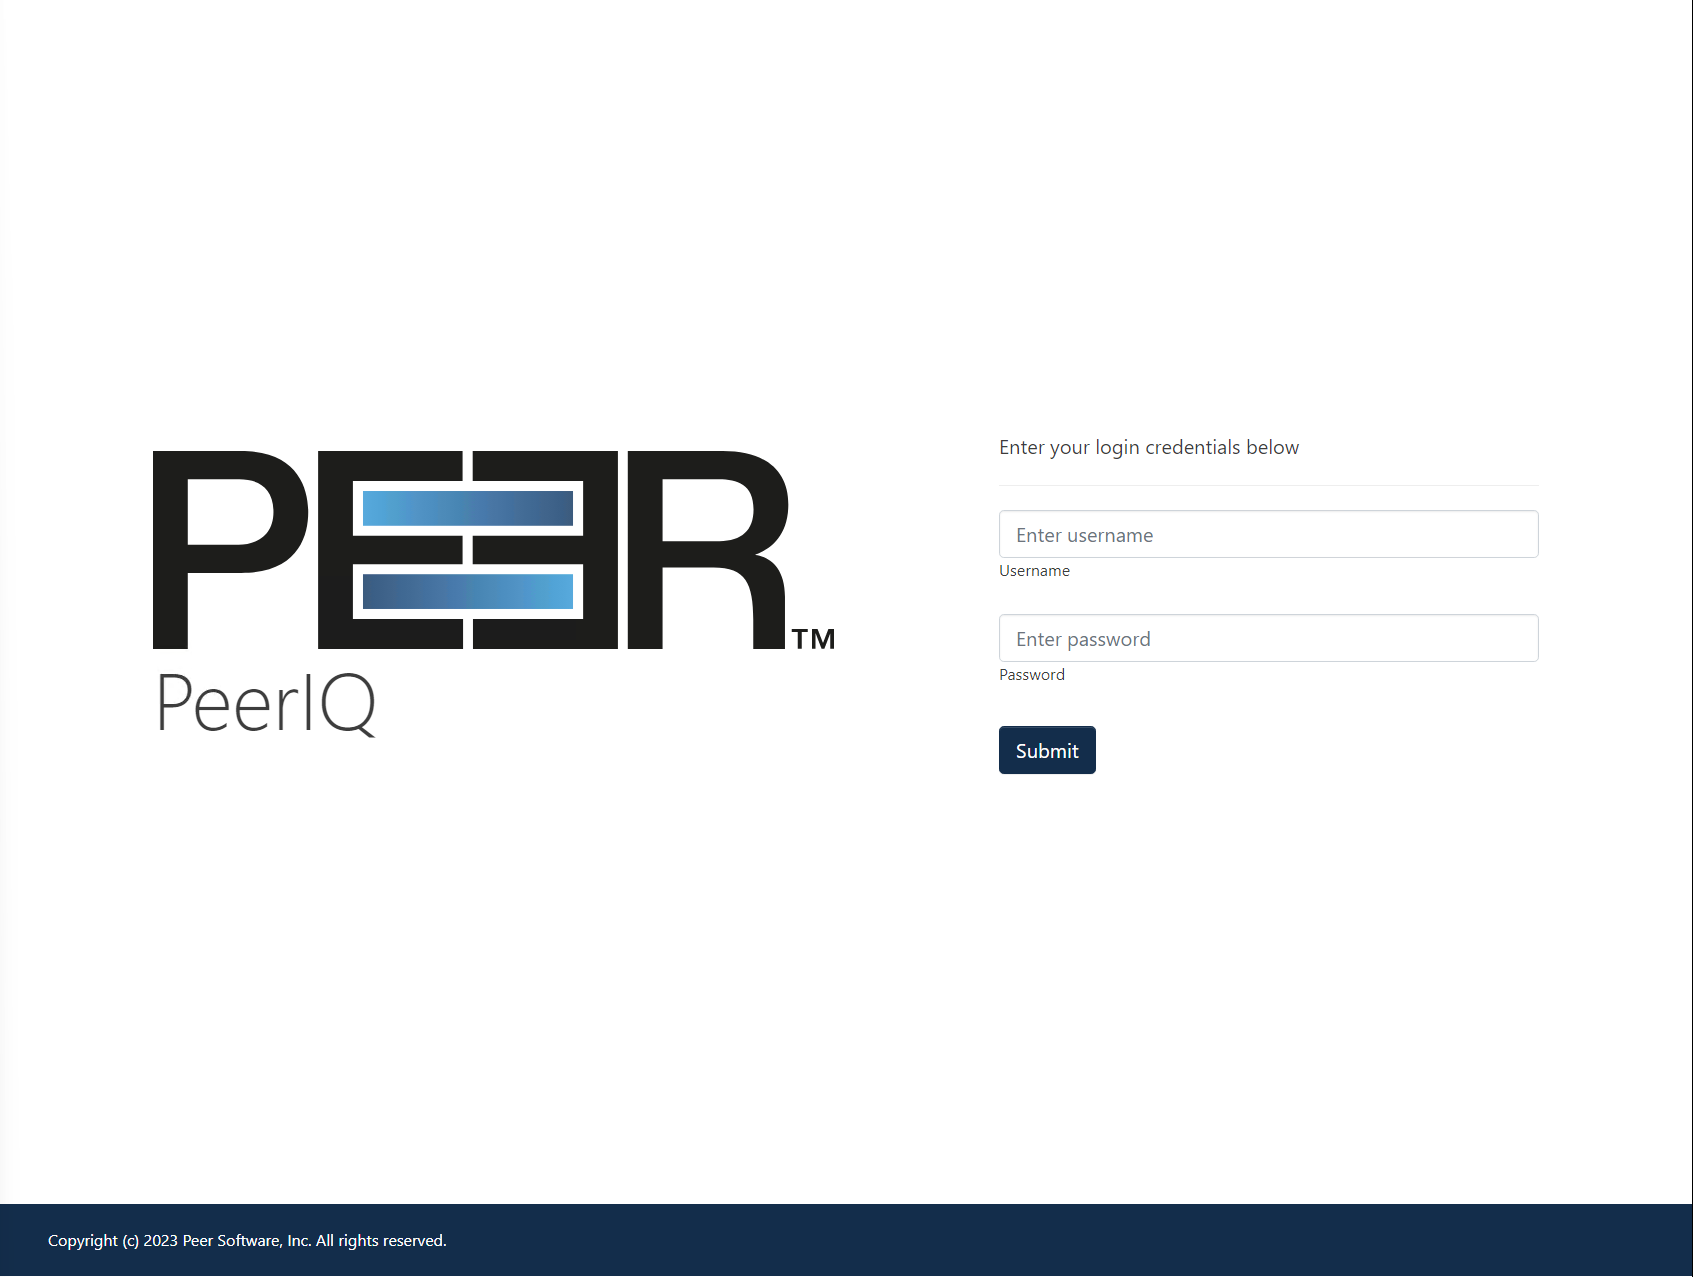 PeerIQ web interface login screen